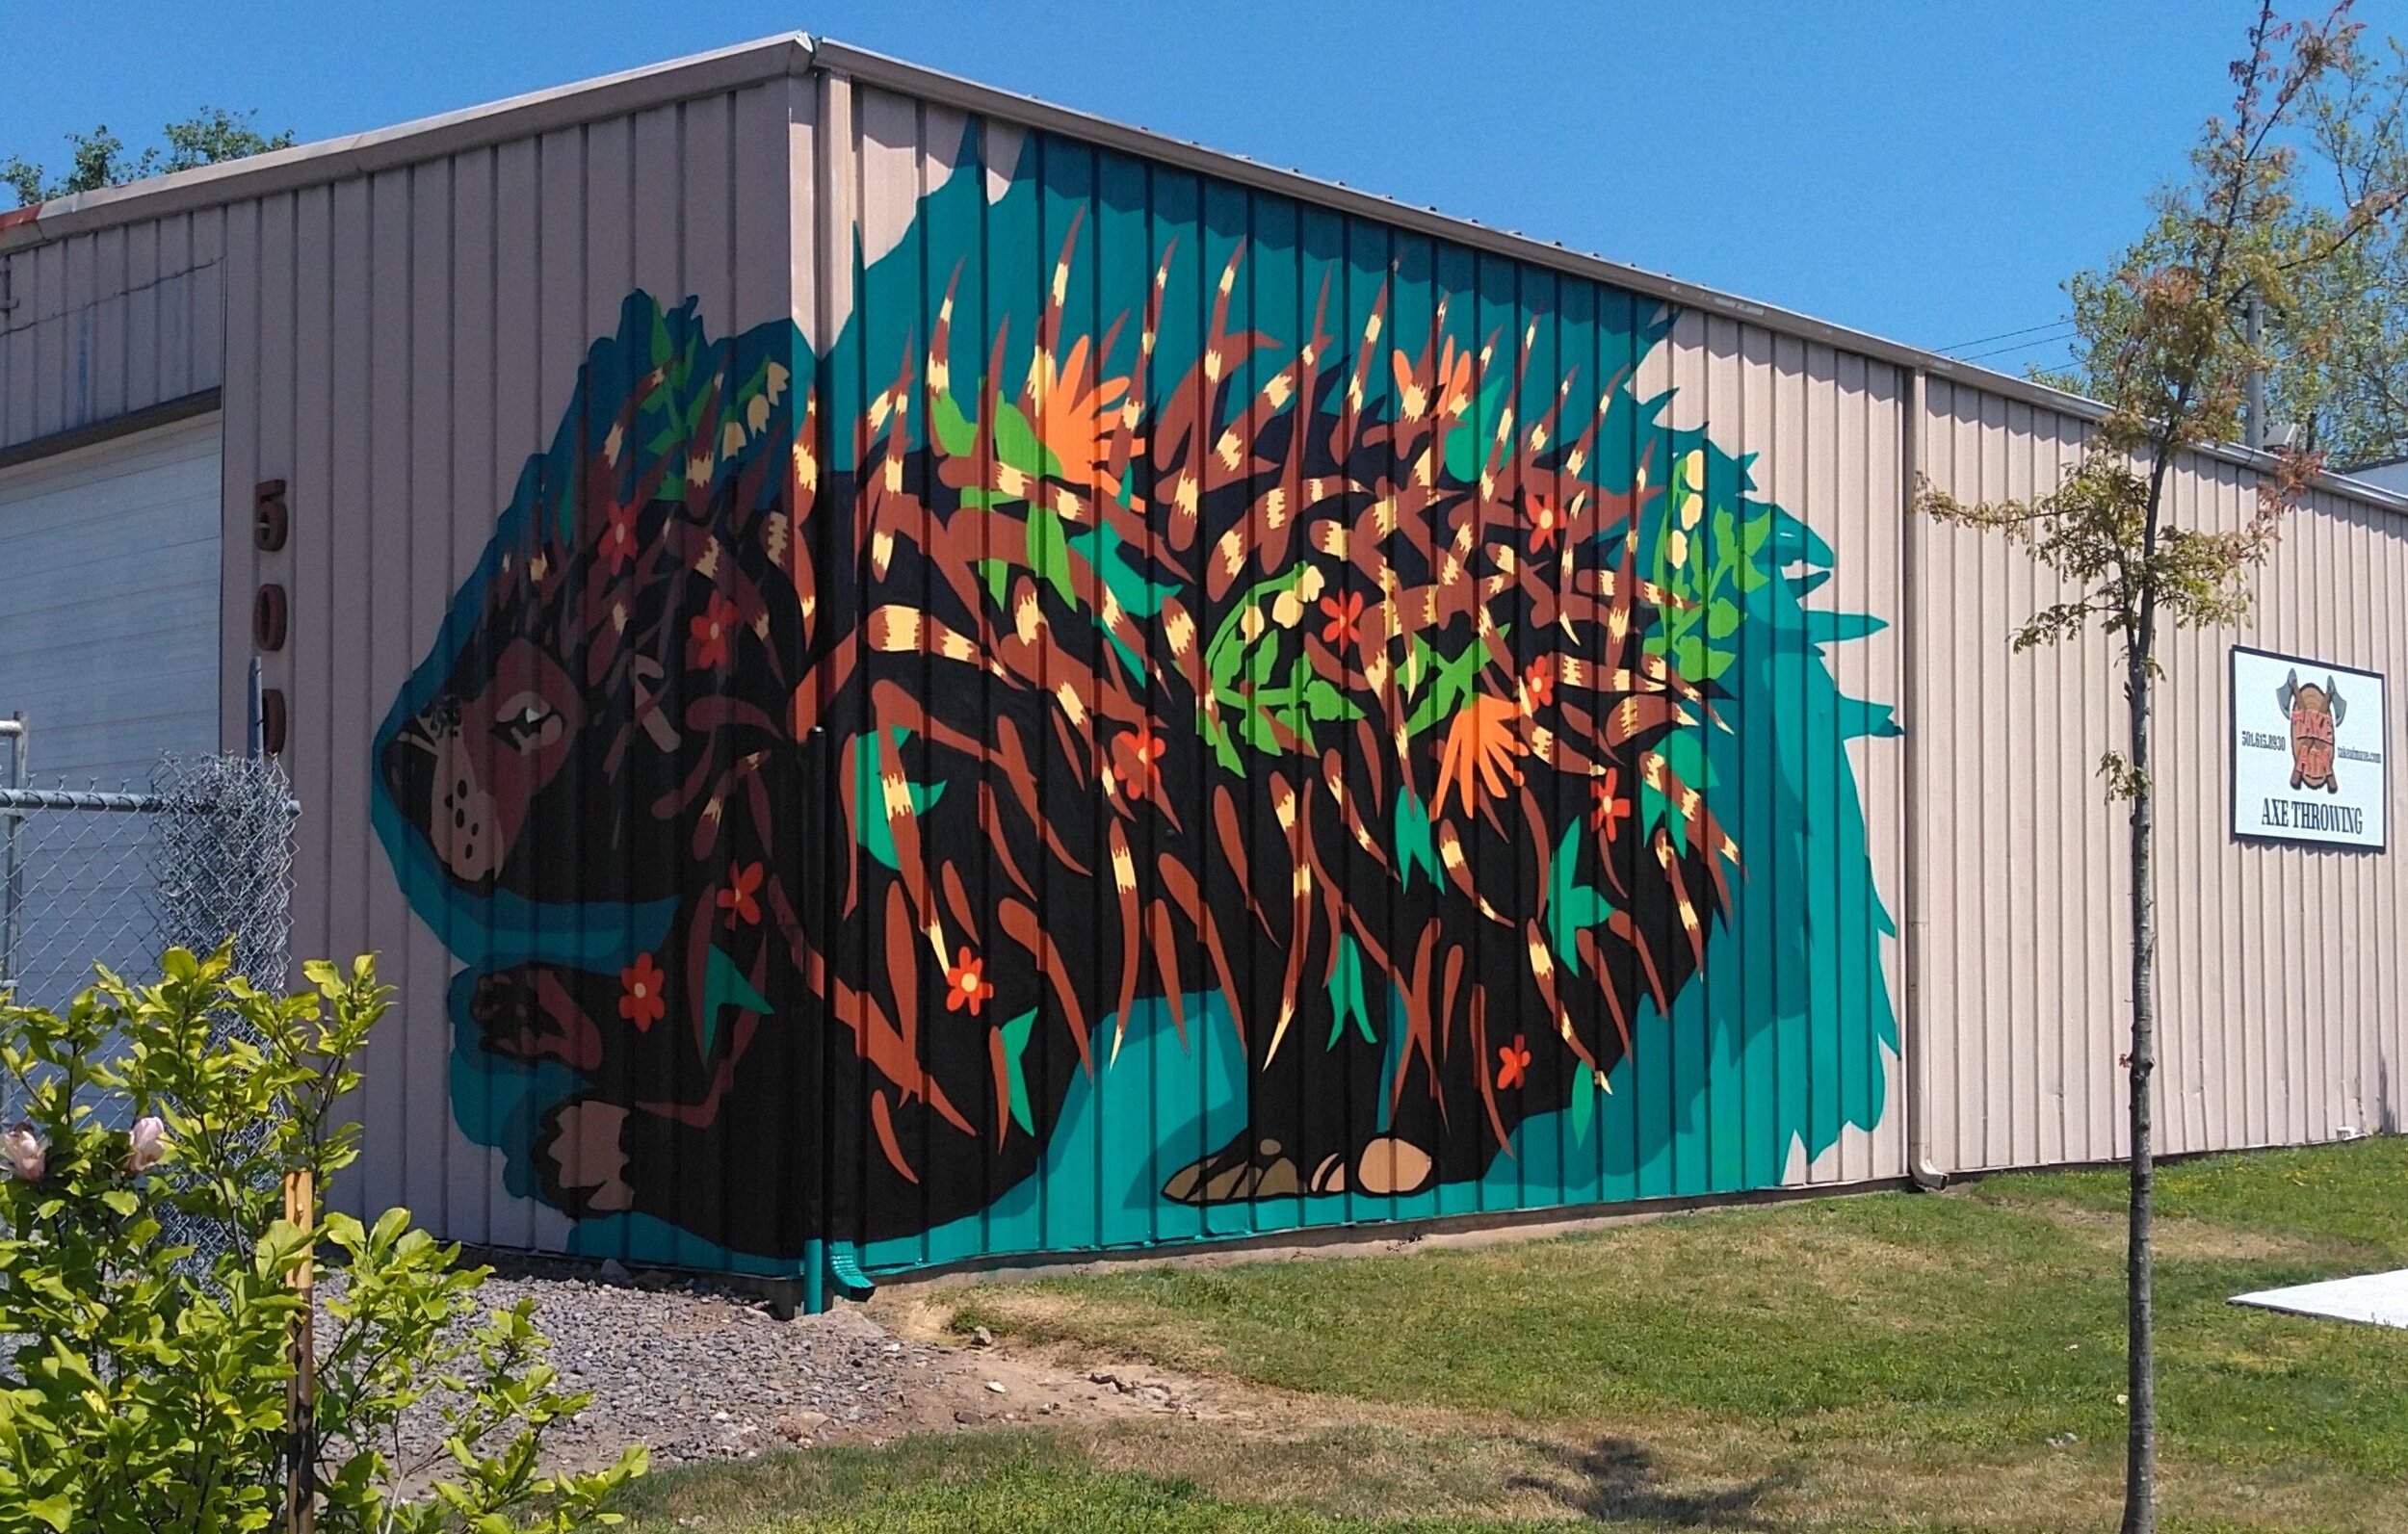    Porcupine  , spray paint, North Little Rock, Arkansas 